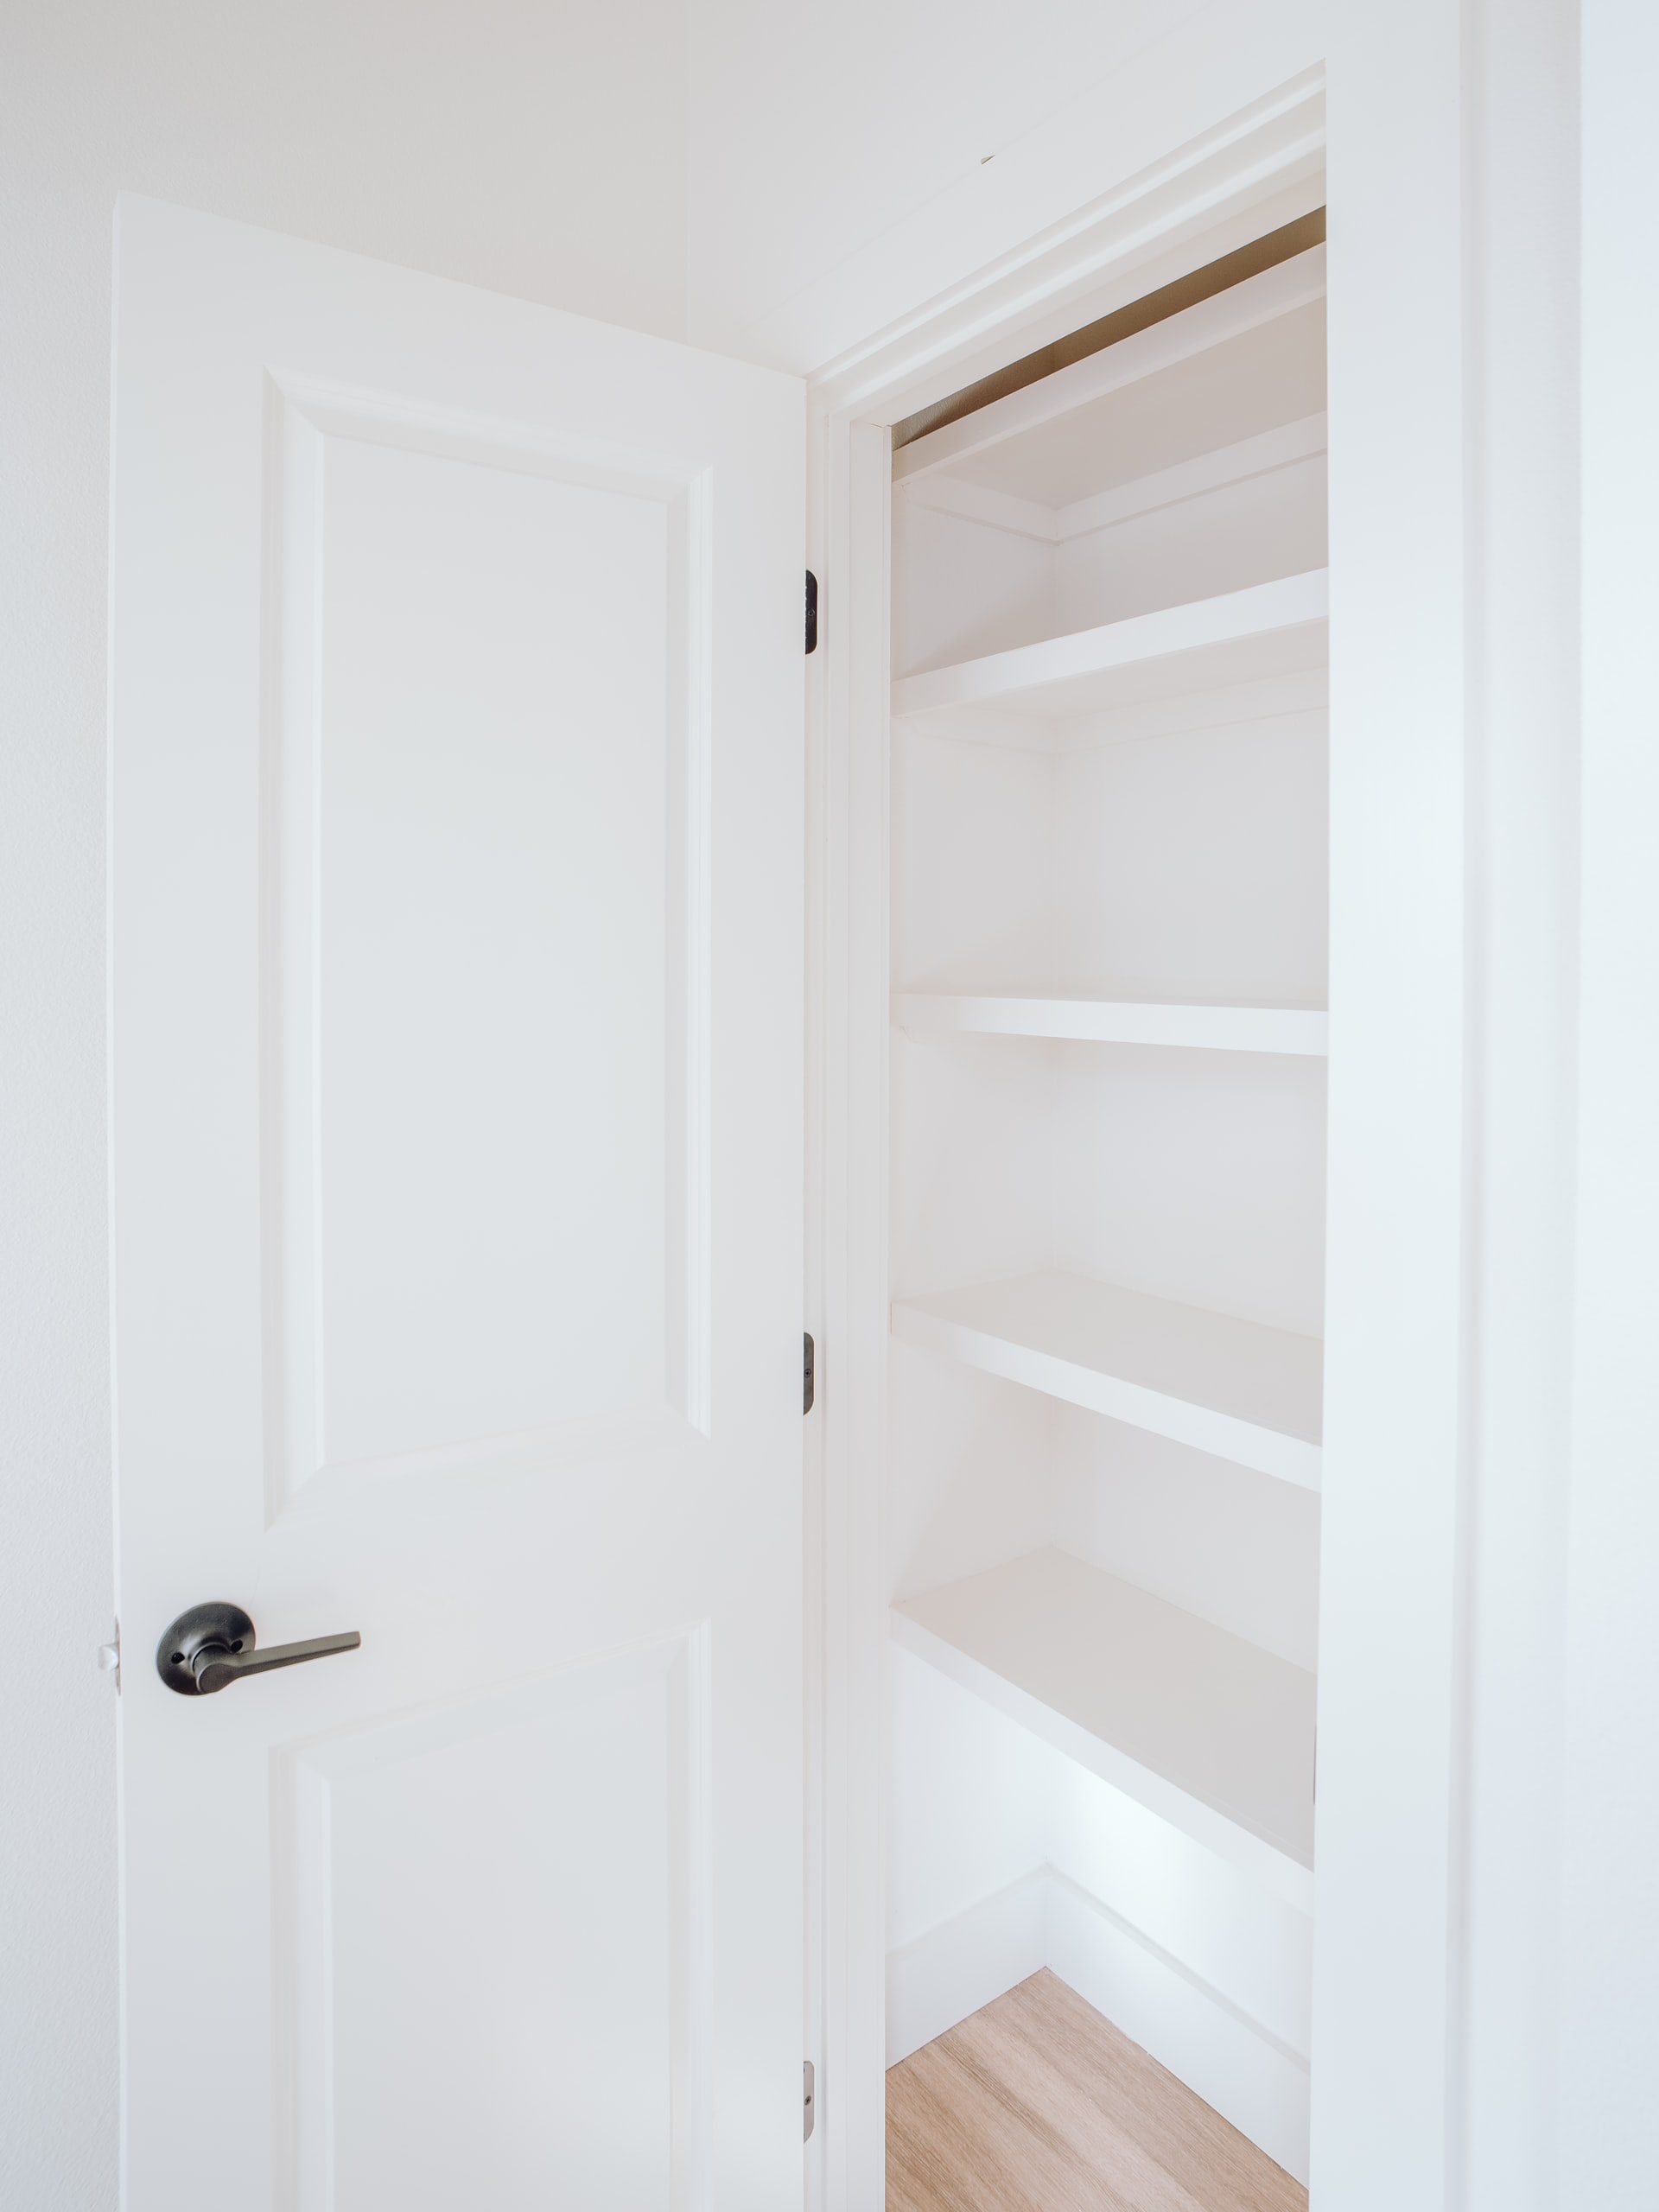 An opened, empty white closet to be turned into a mini bar design idea